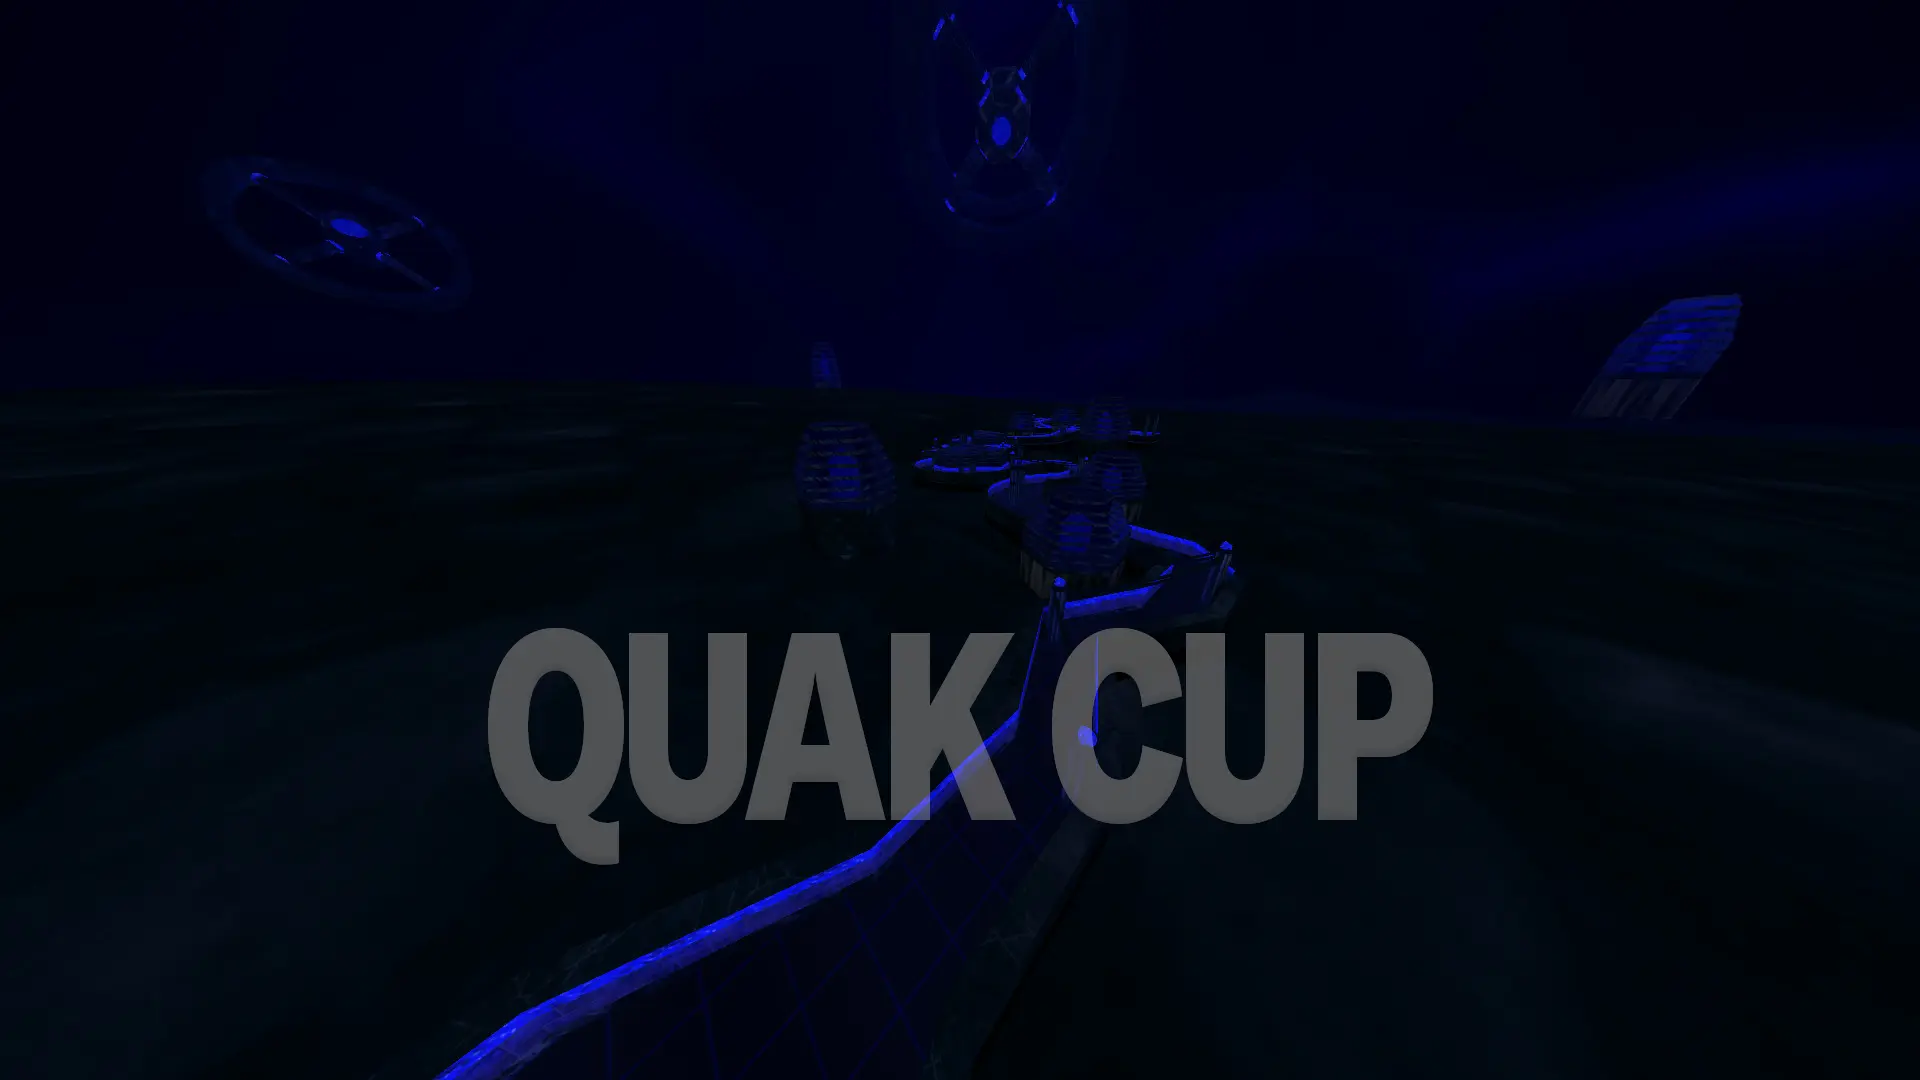 quakcup01-1.pk3